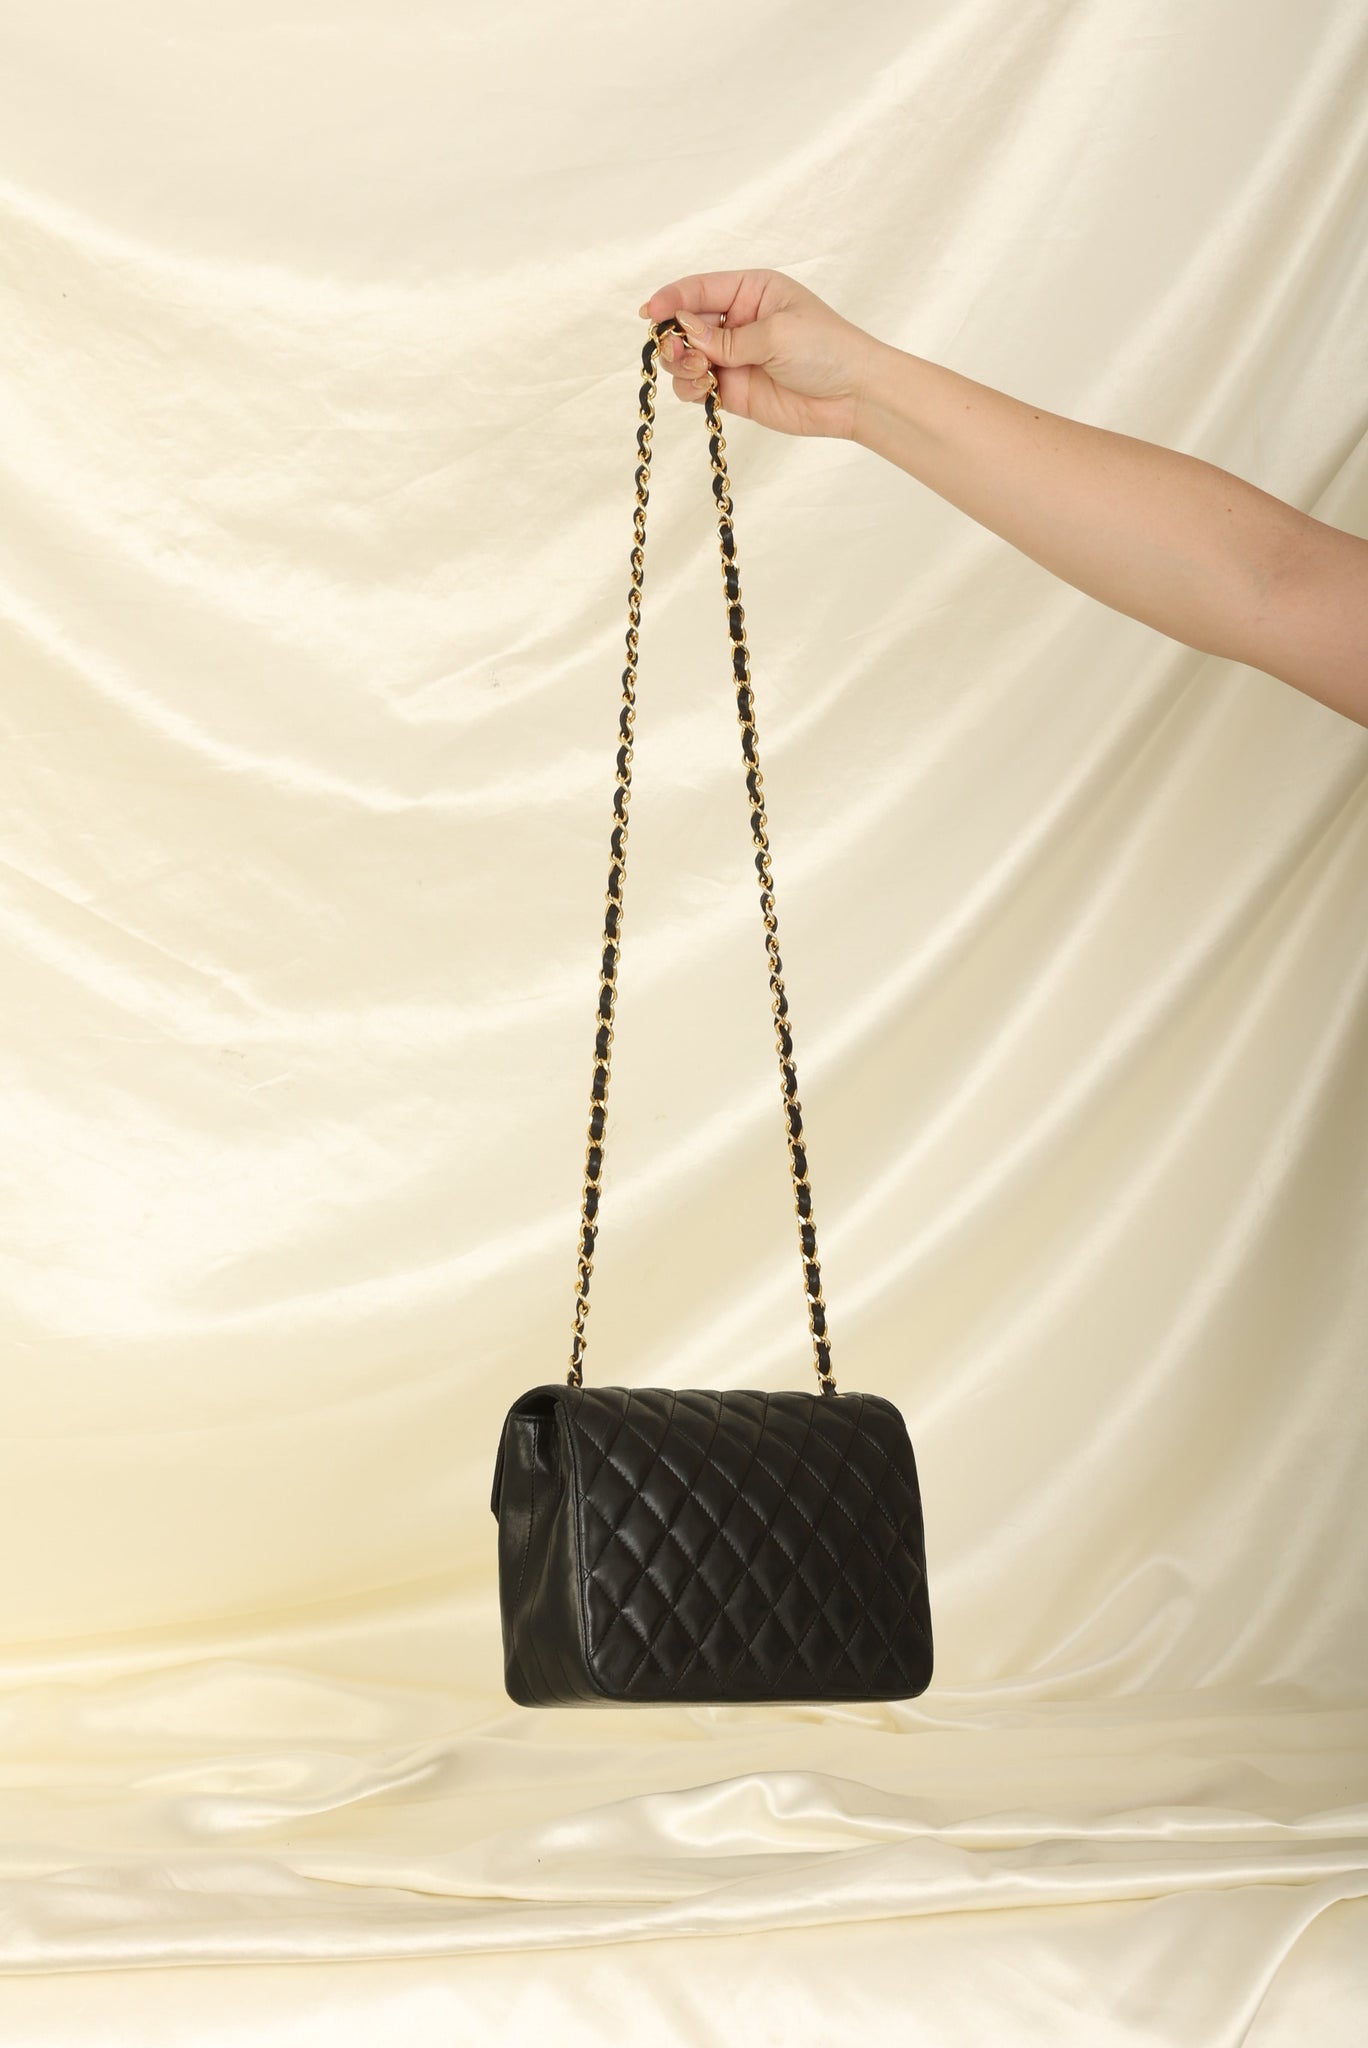 Chanel Lambskin Small Shoulder Bag